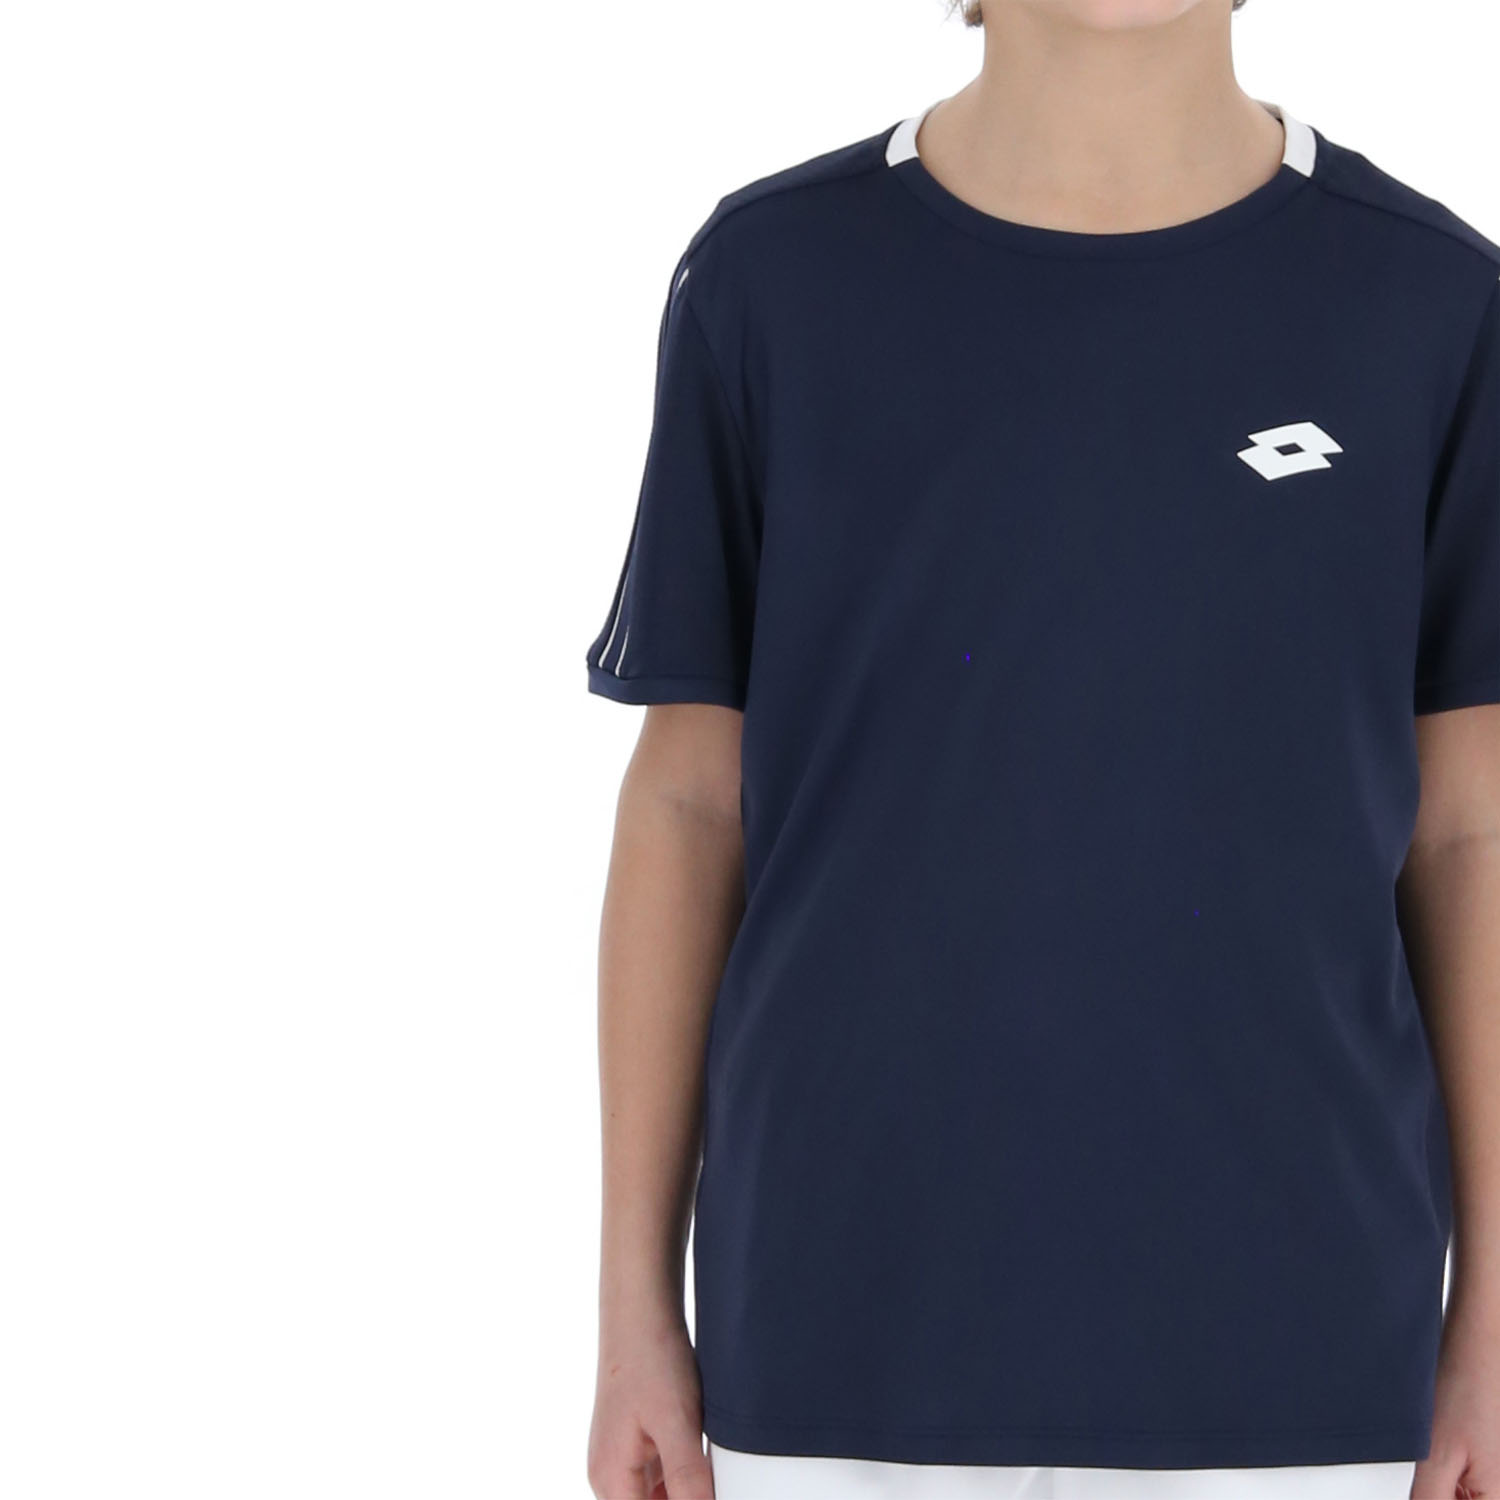 Lotto Squadra II T-Shirt Boys - Navy Blue